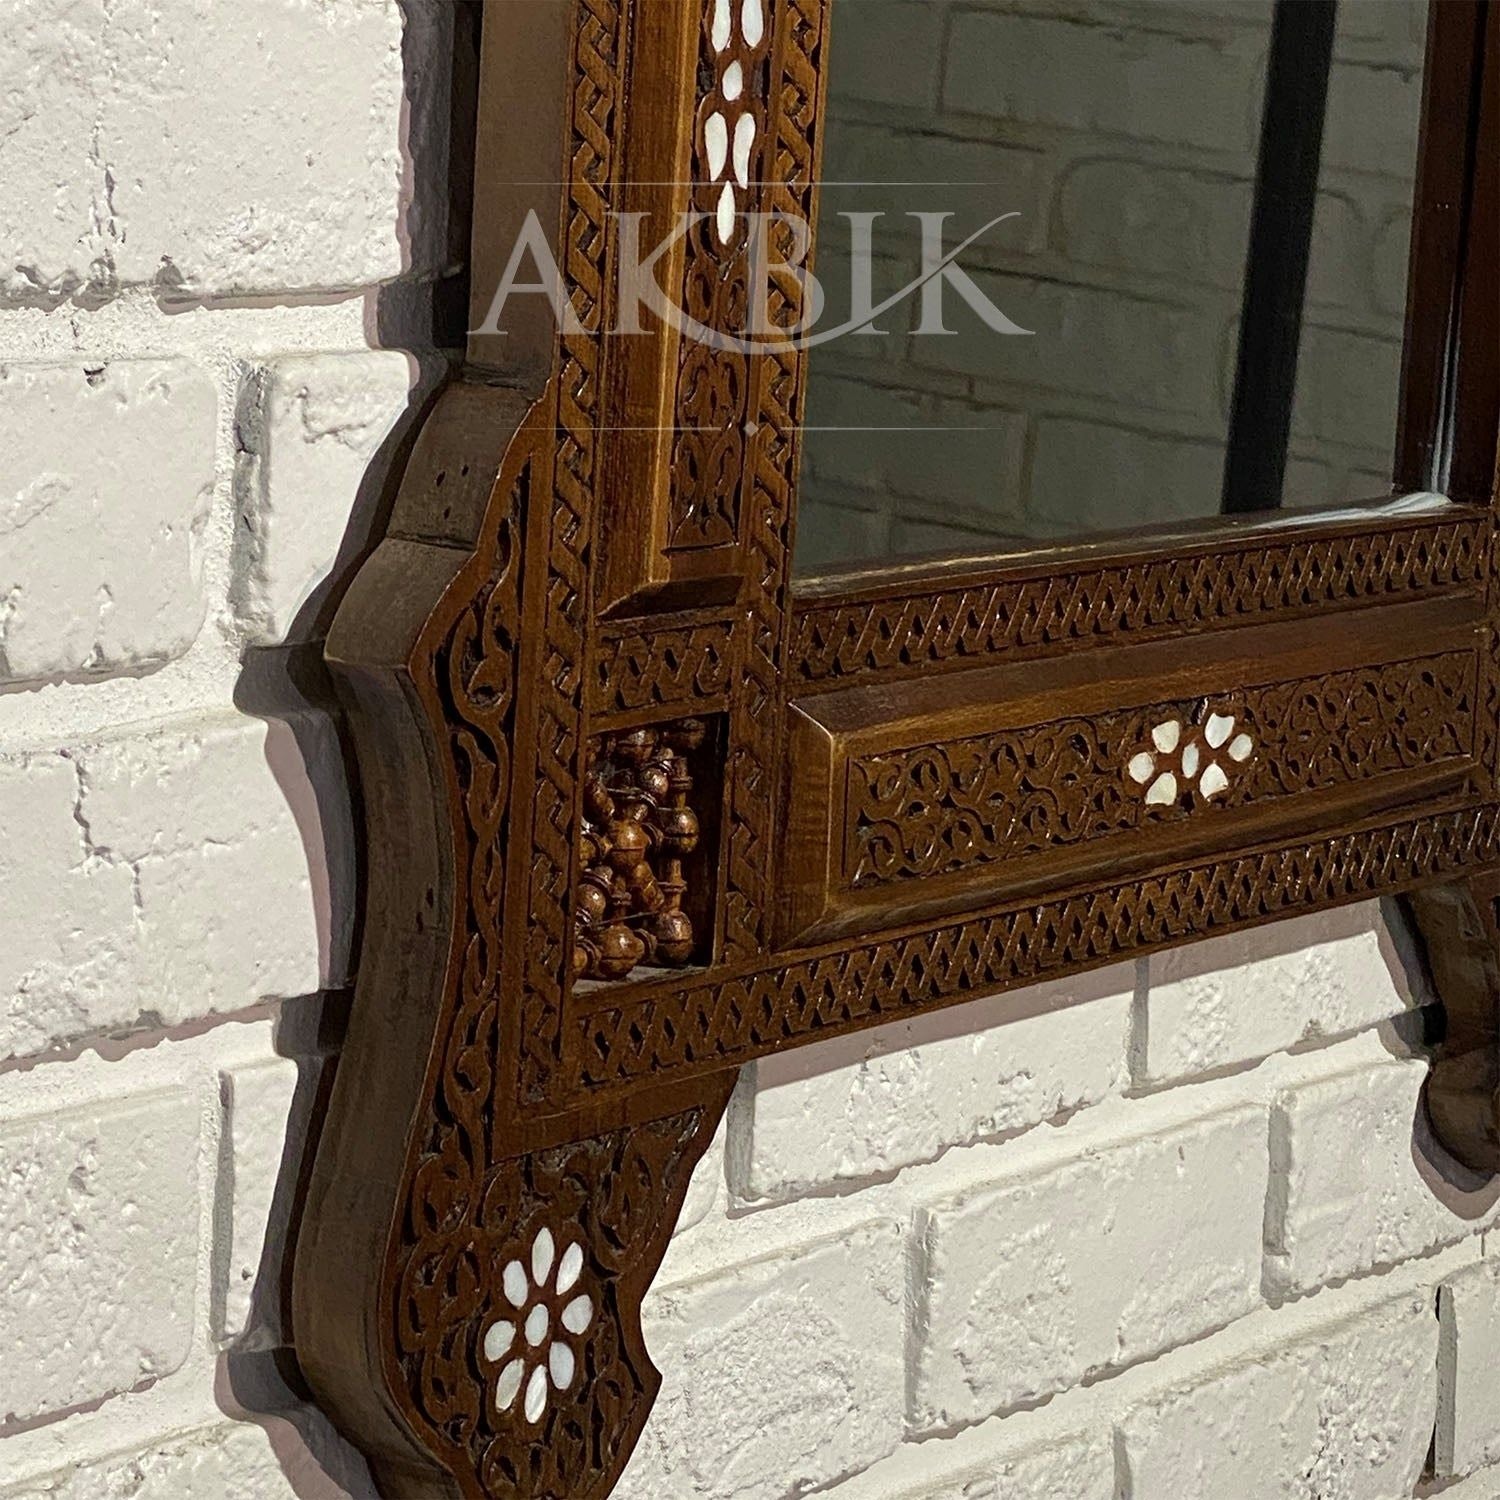 GRATIANA HAND-CARVED MIRROR - AKBIK Furniture & Design